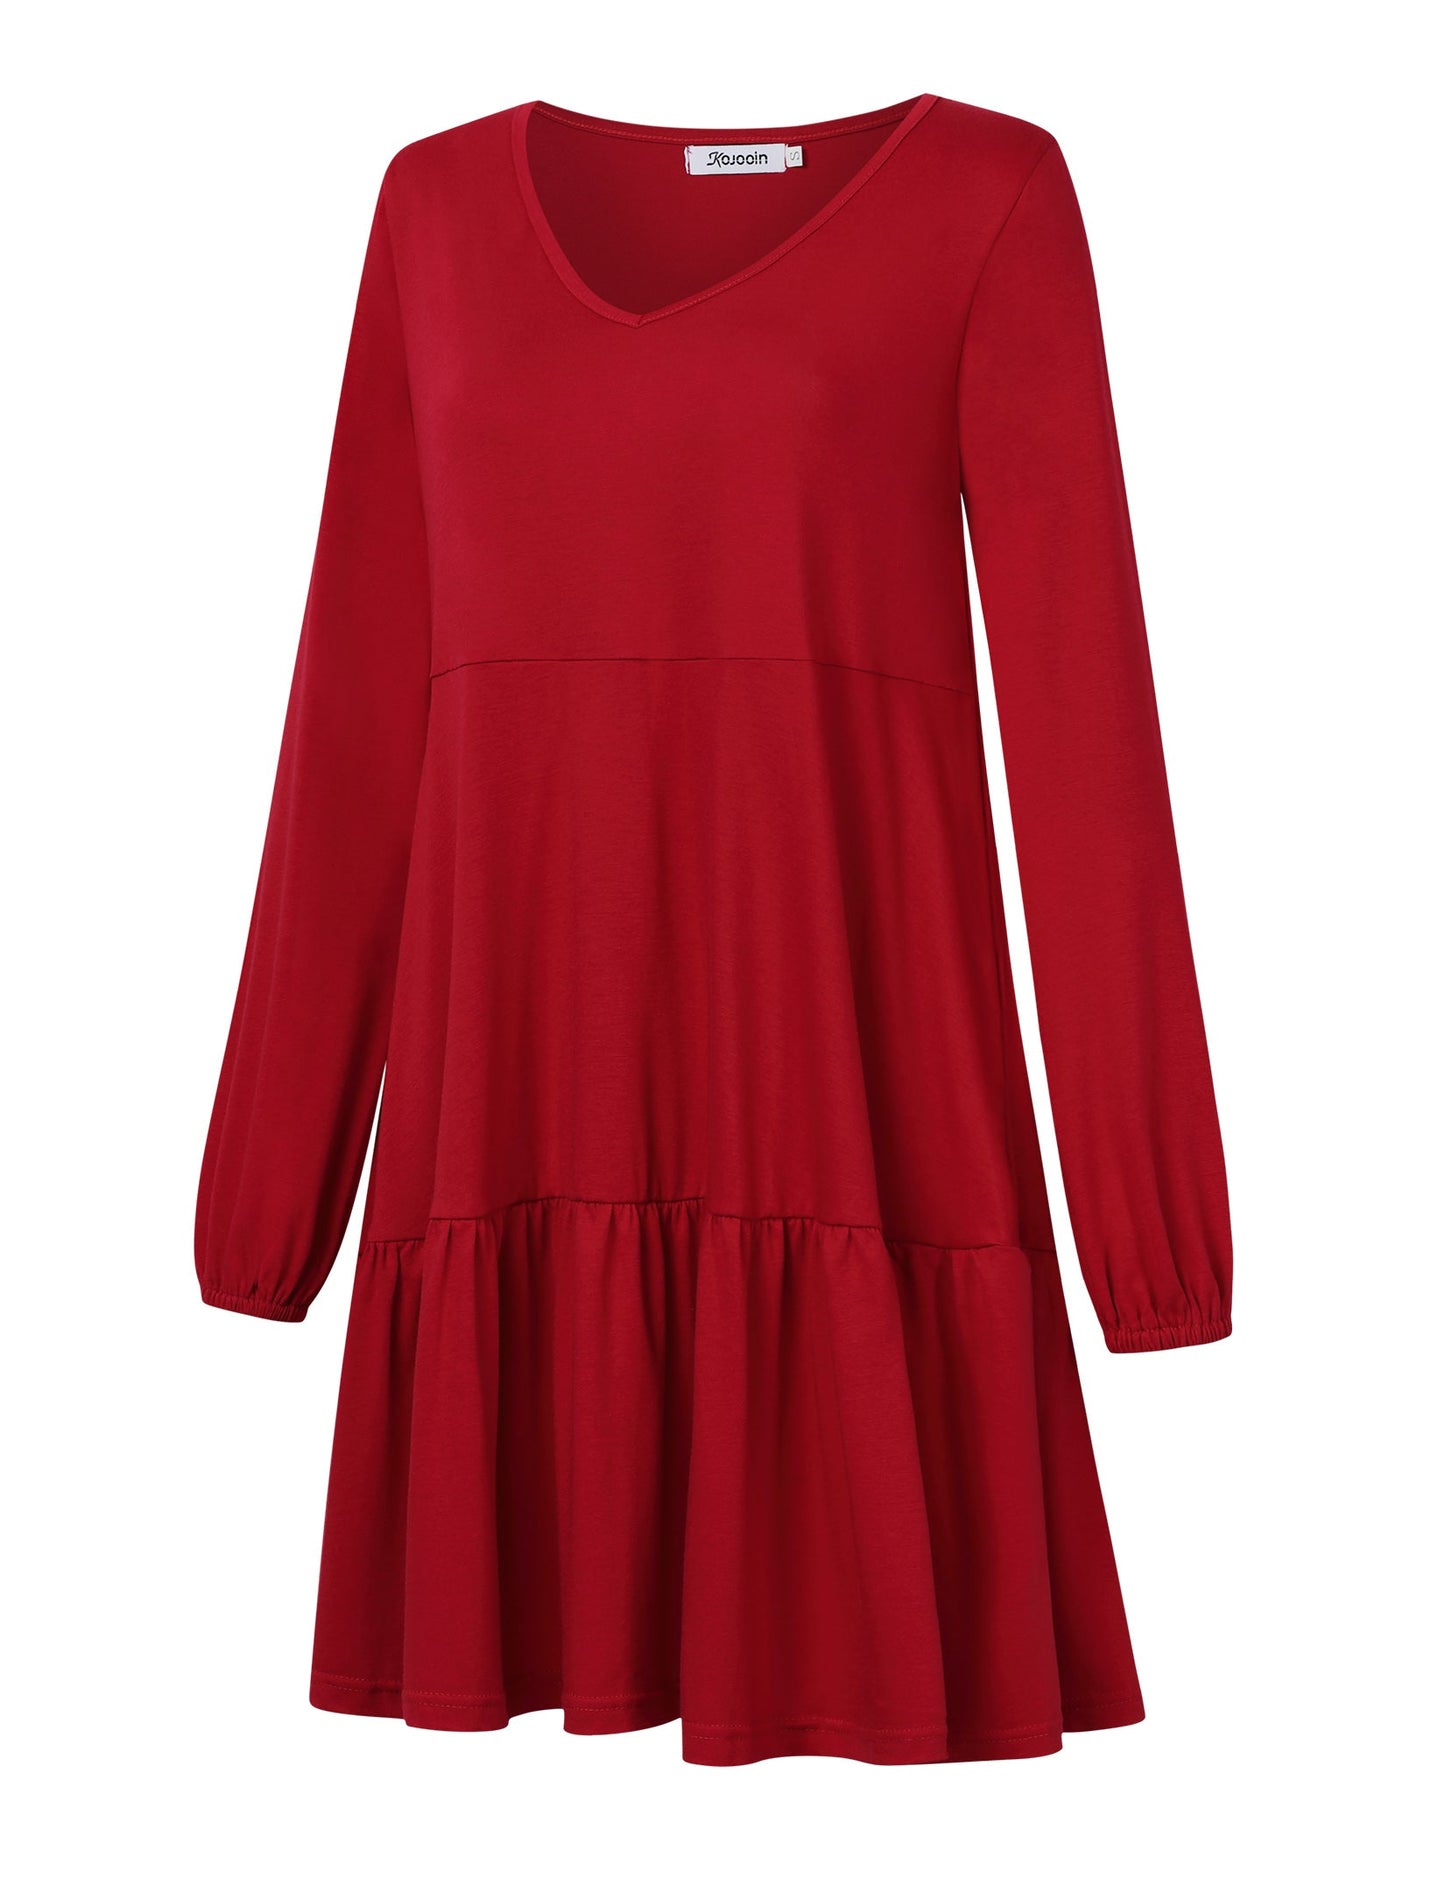 YESFASHION Women's V Neck Layered Dress Long Sleeve Dress Wine Red